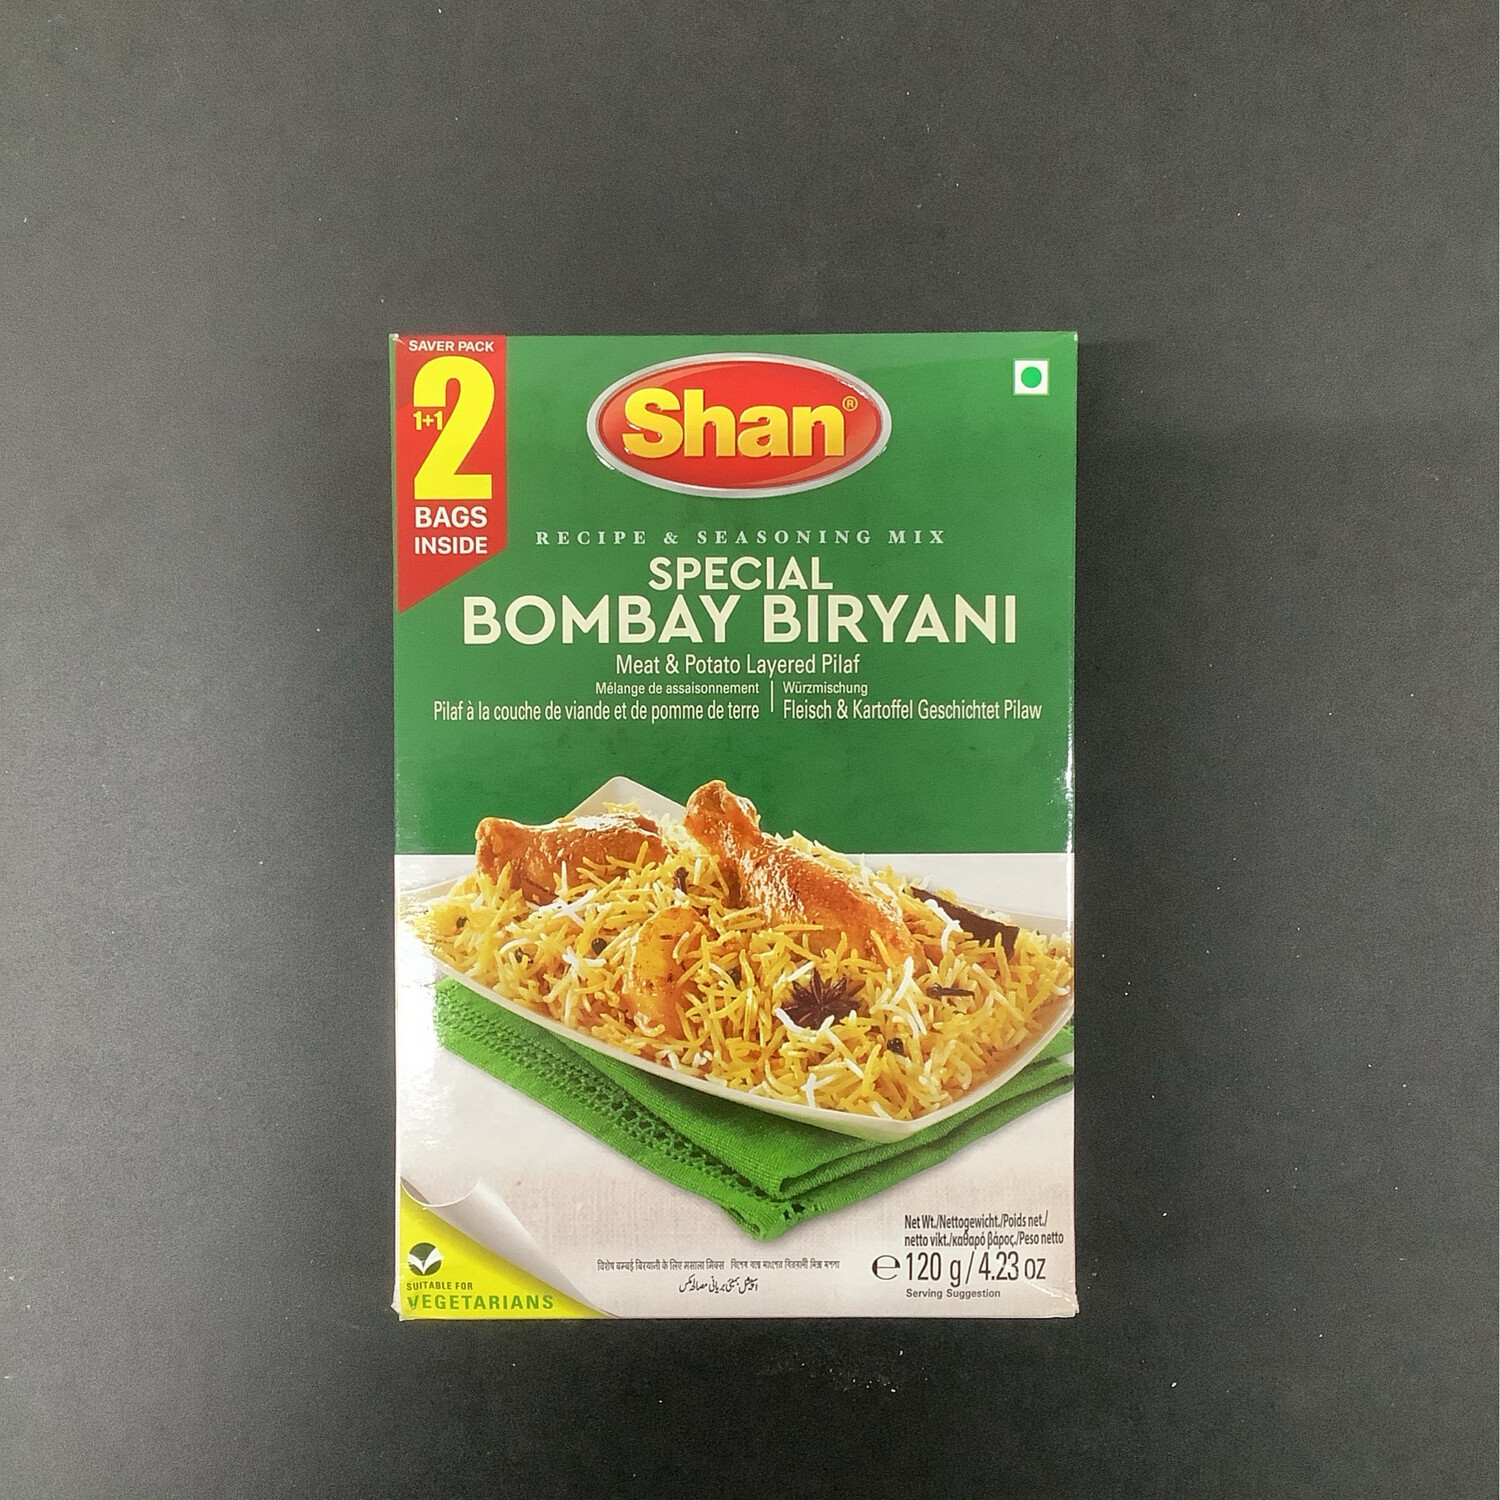 Shan special bombay biryani 2 bags 120g